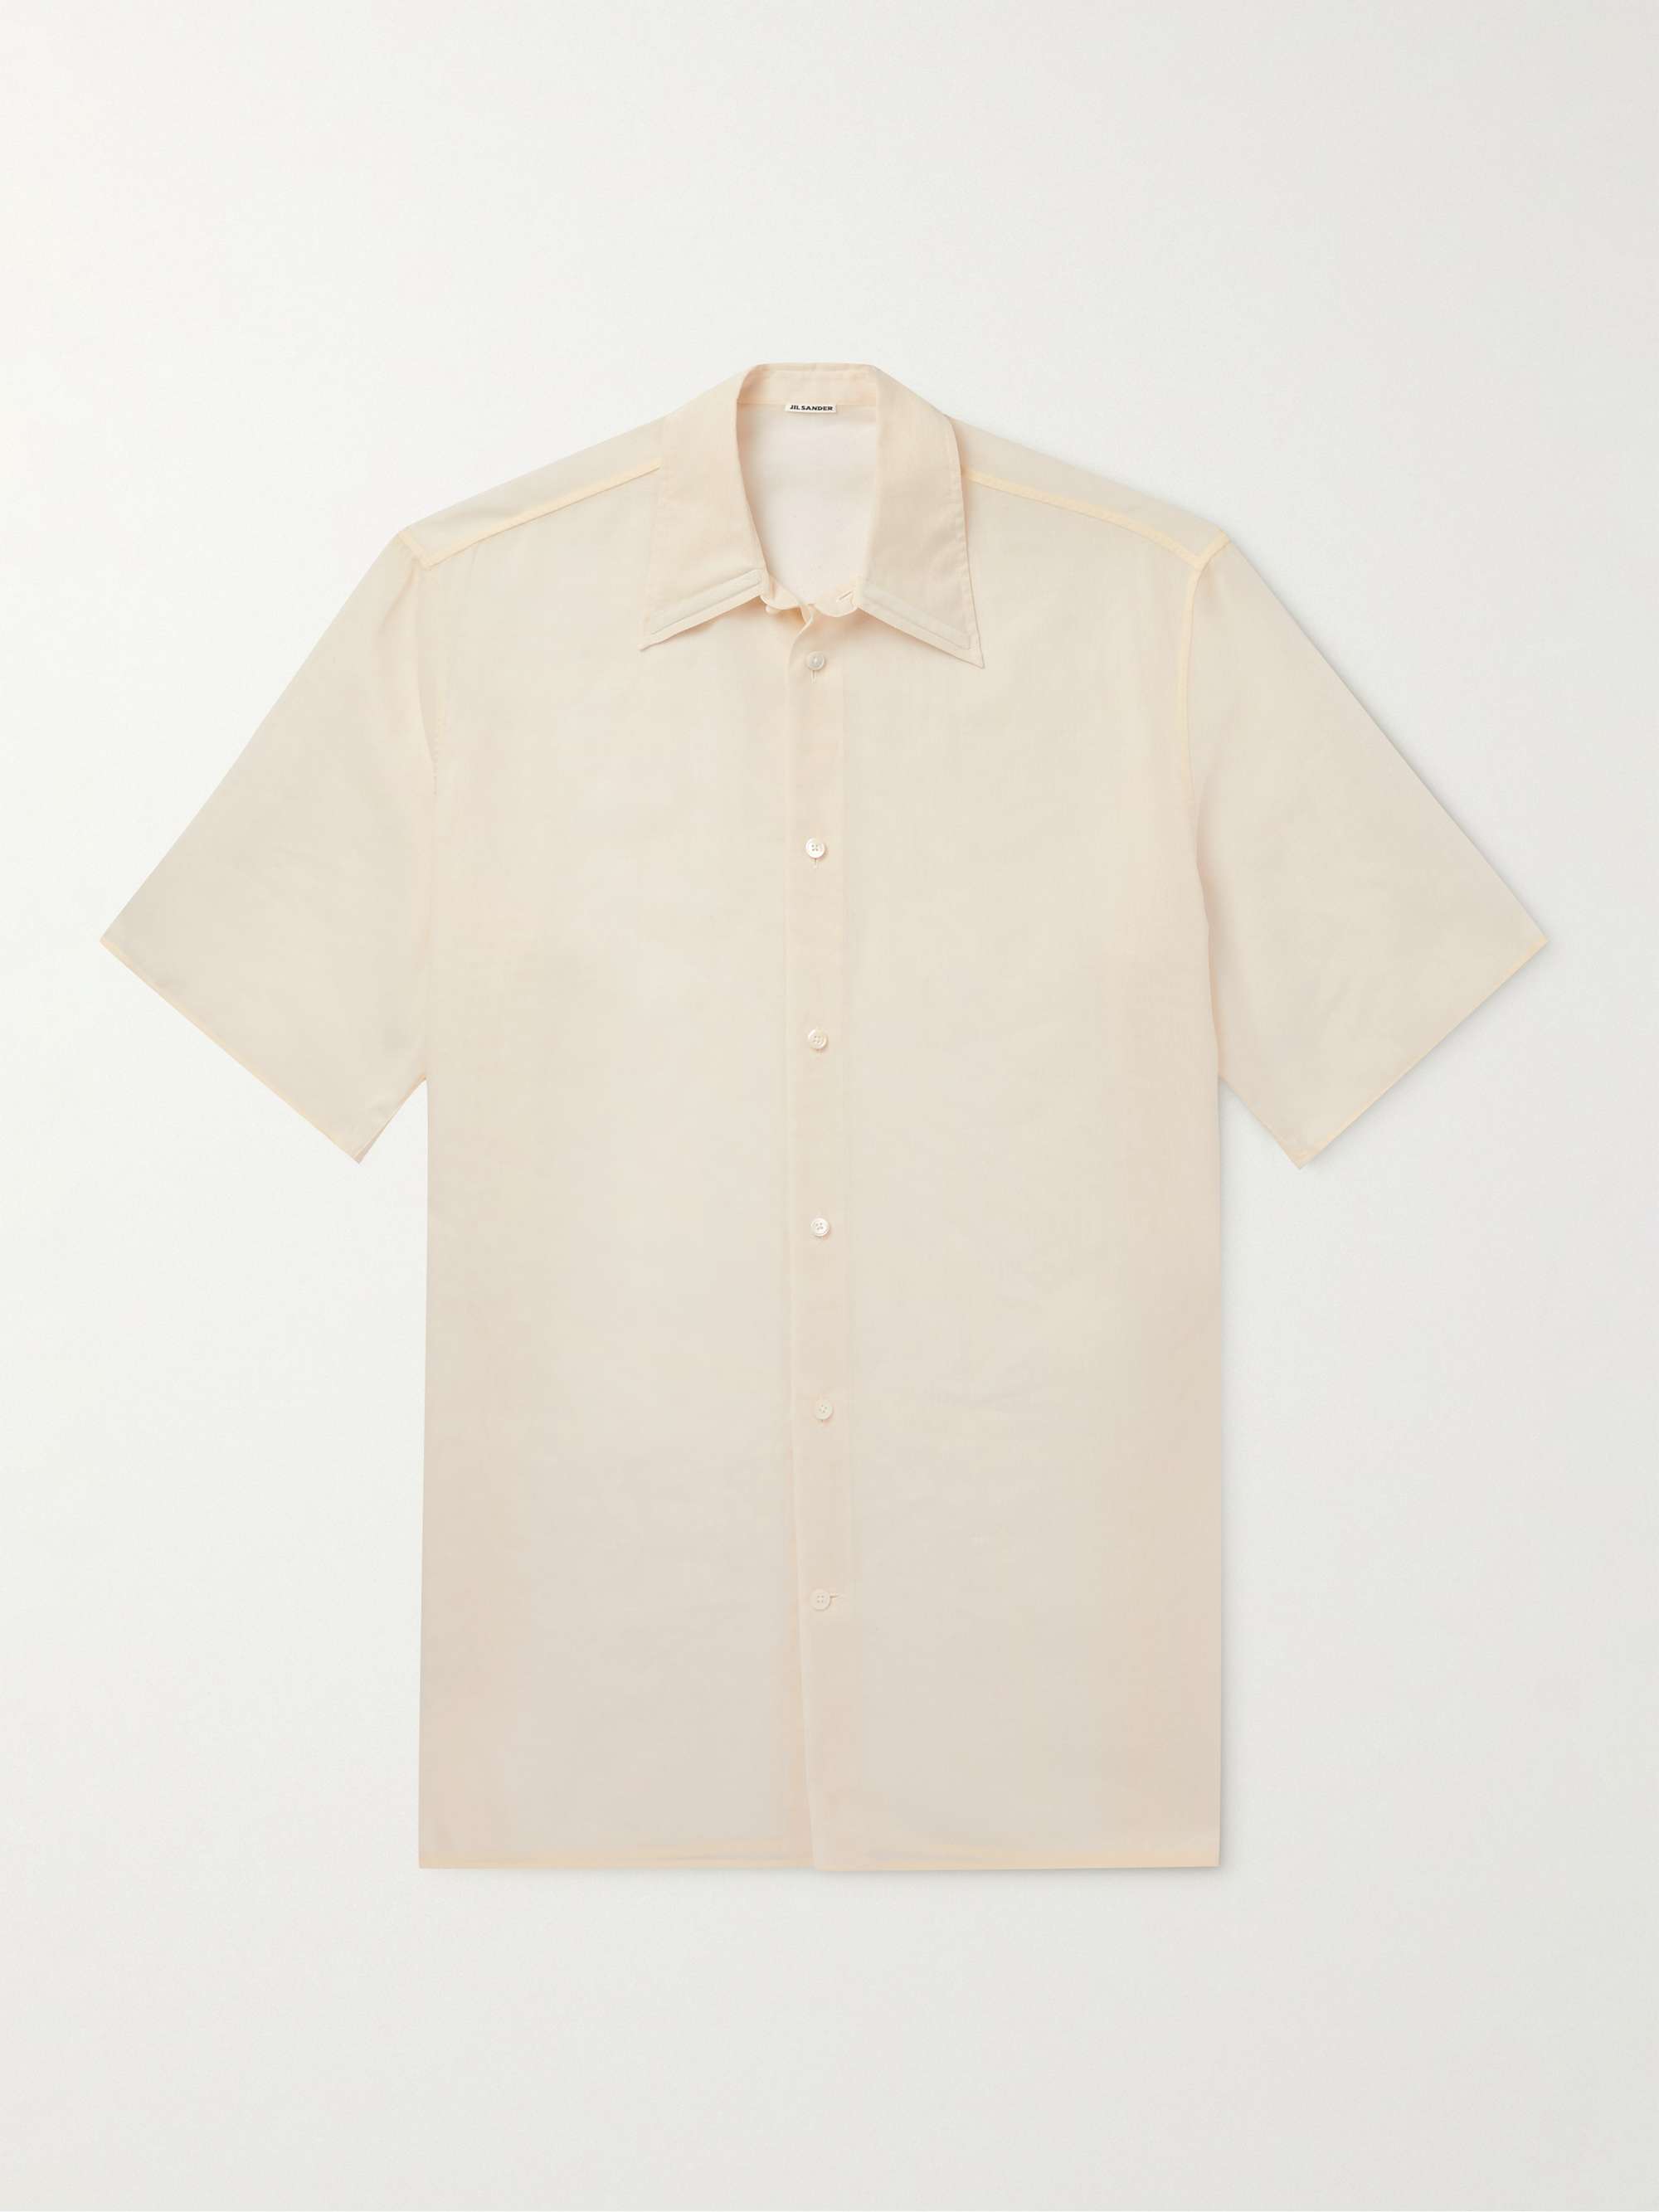 JIL SANDER Cotton-Gauze Shirt for Men | MR PORTER